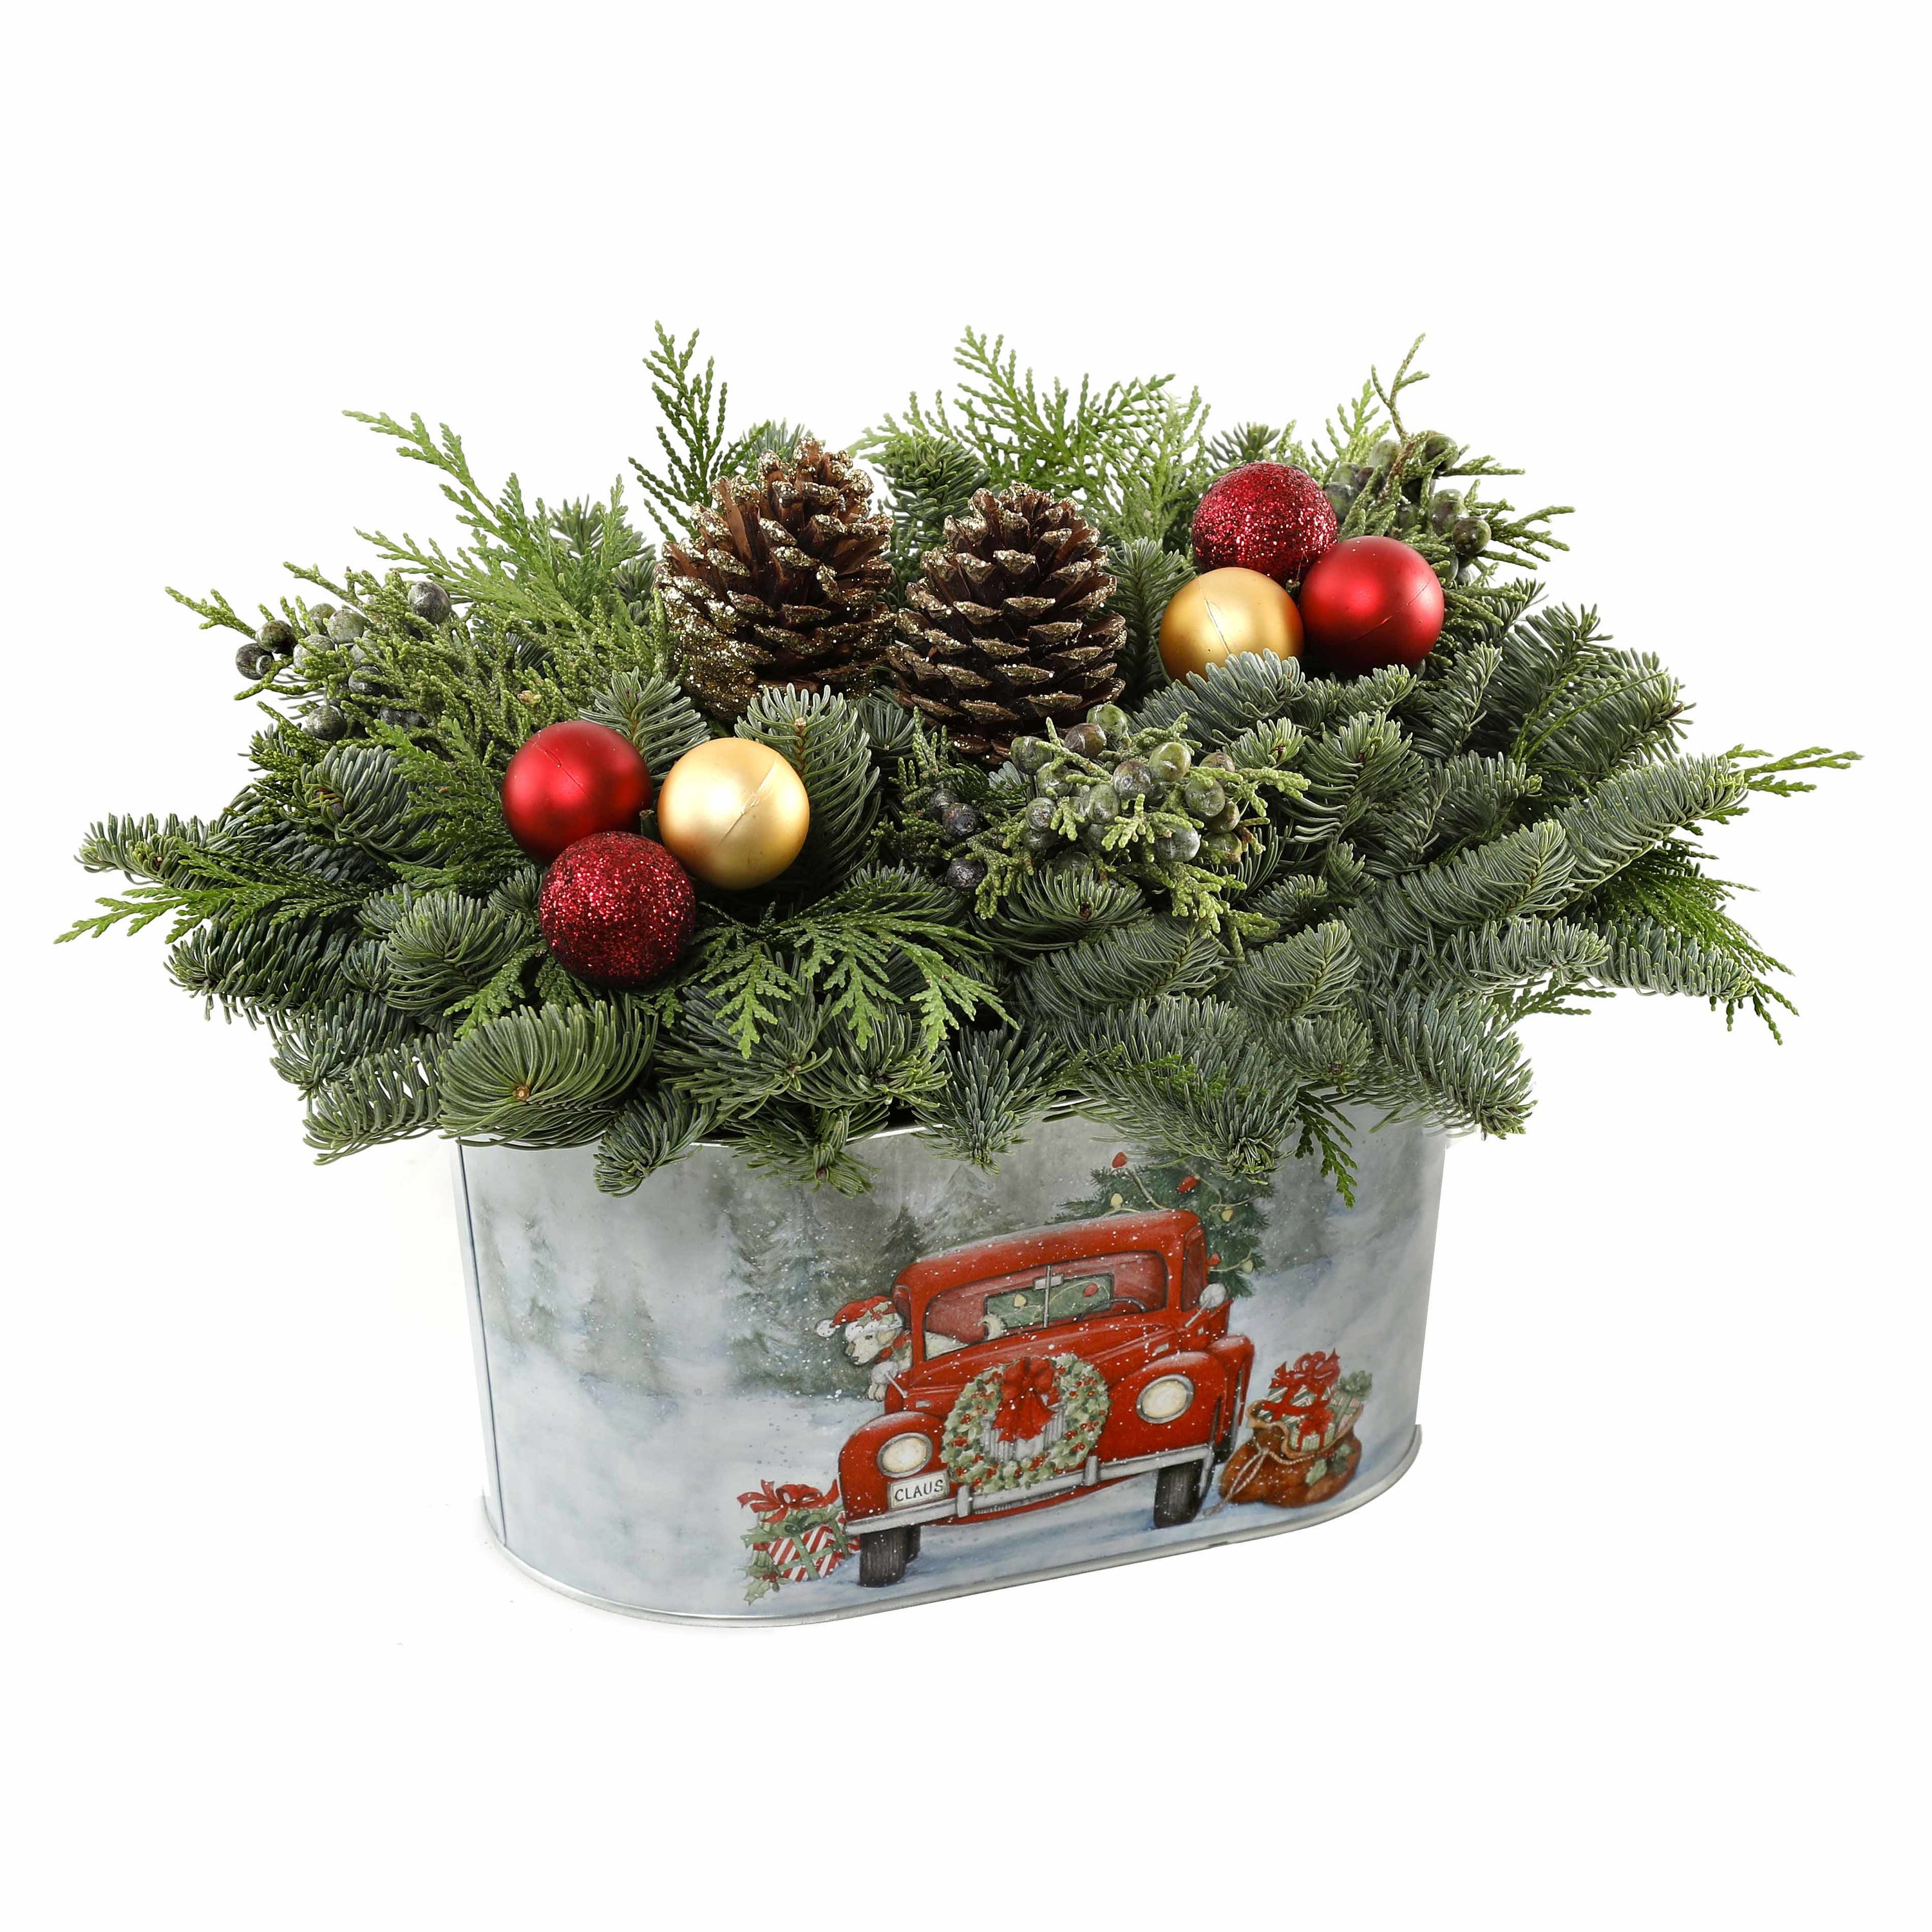 Fresh Christmas Greenery Basket at Lowes.com